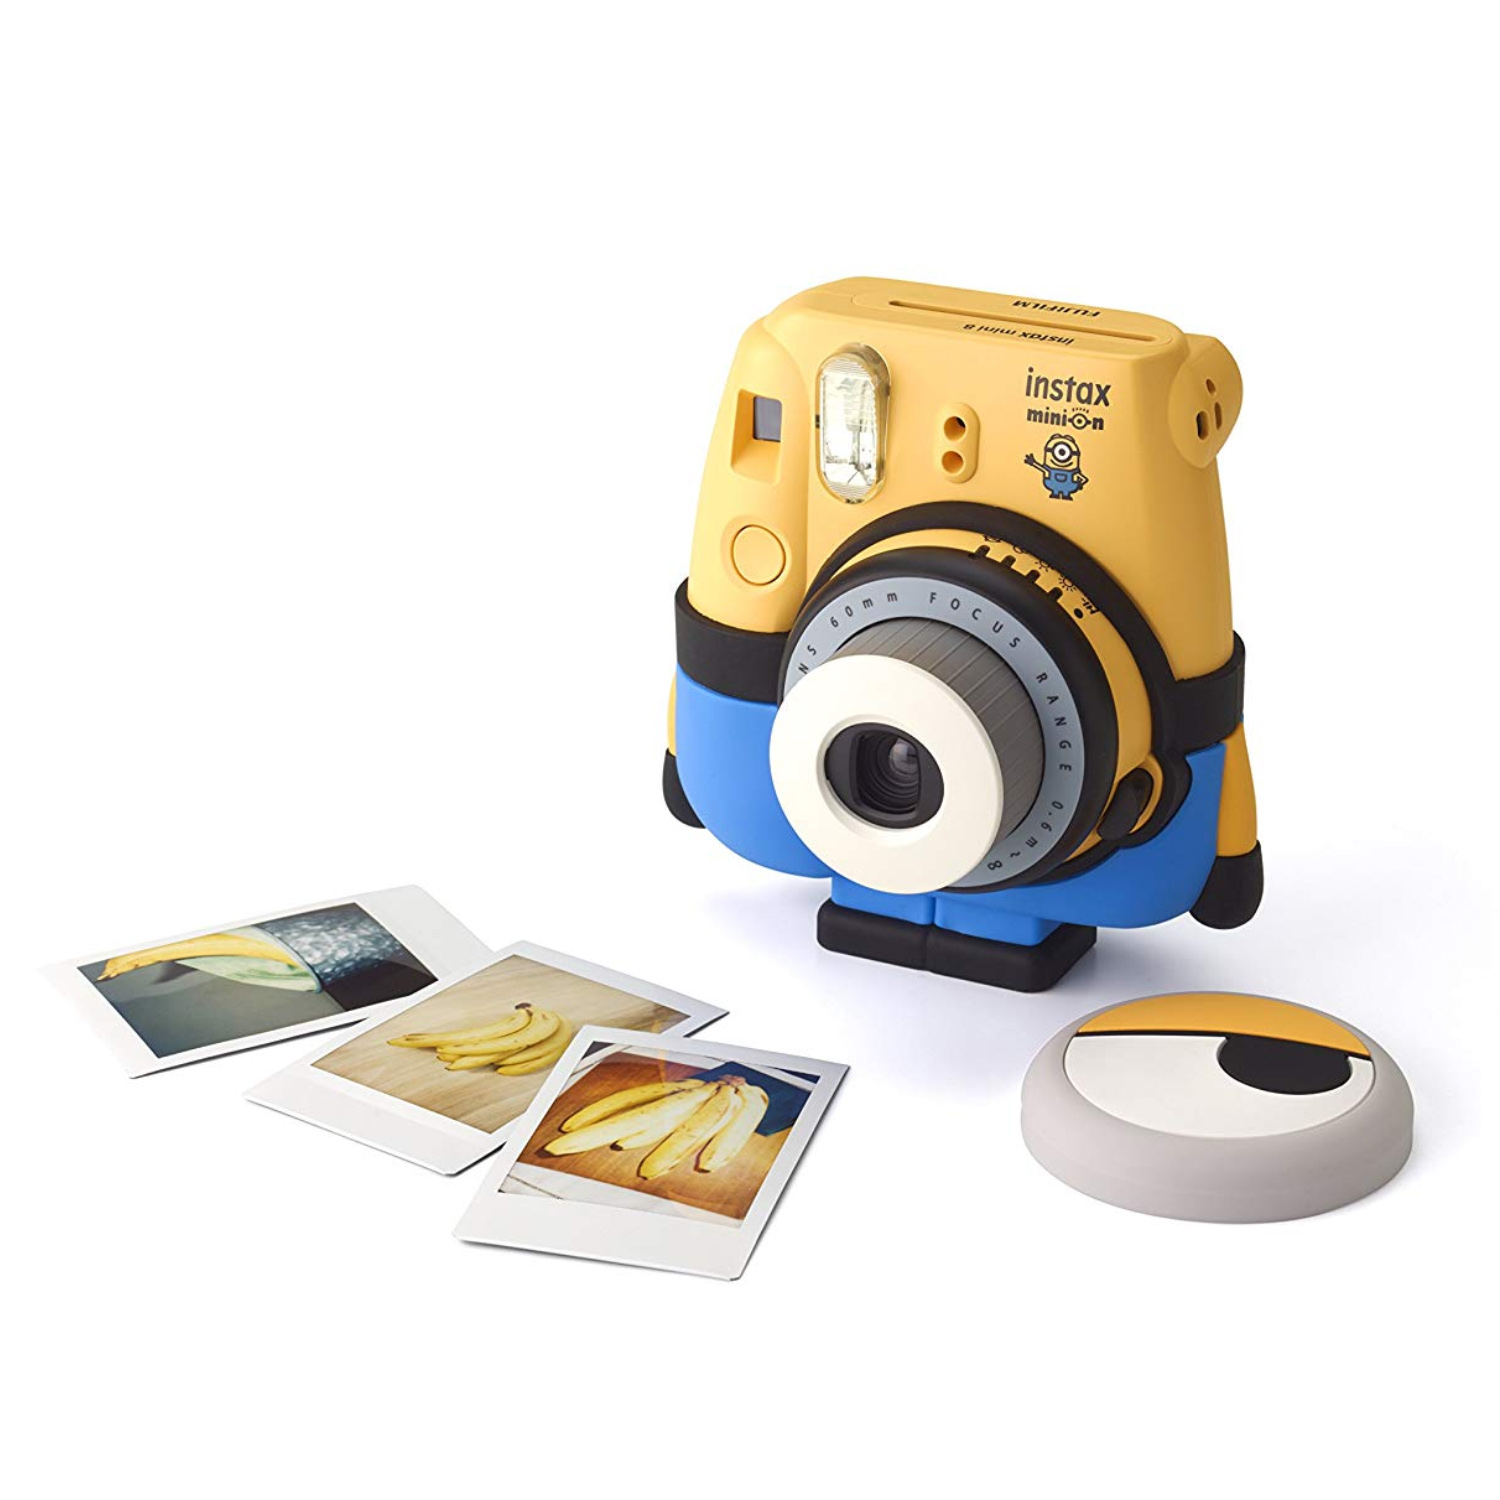 Fujifilm Instax Mini 8 Camera Minions Limited Edition Yellow Special| Blink Kuwait